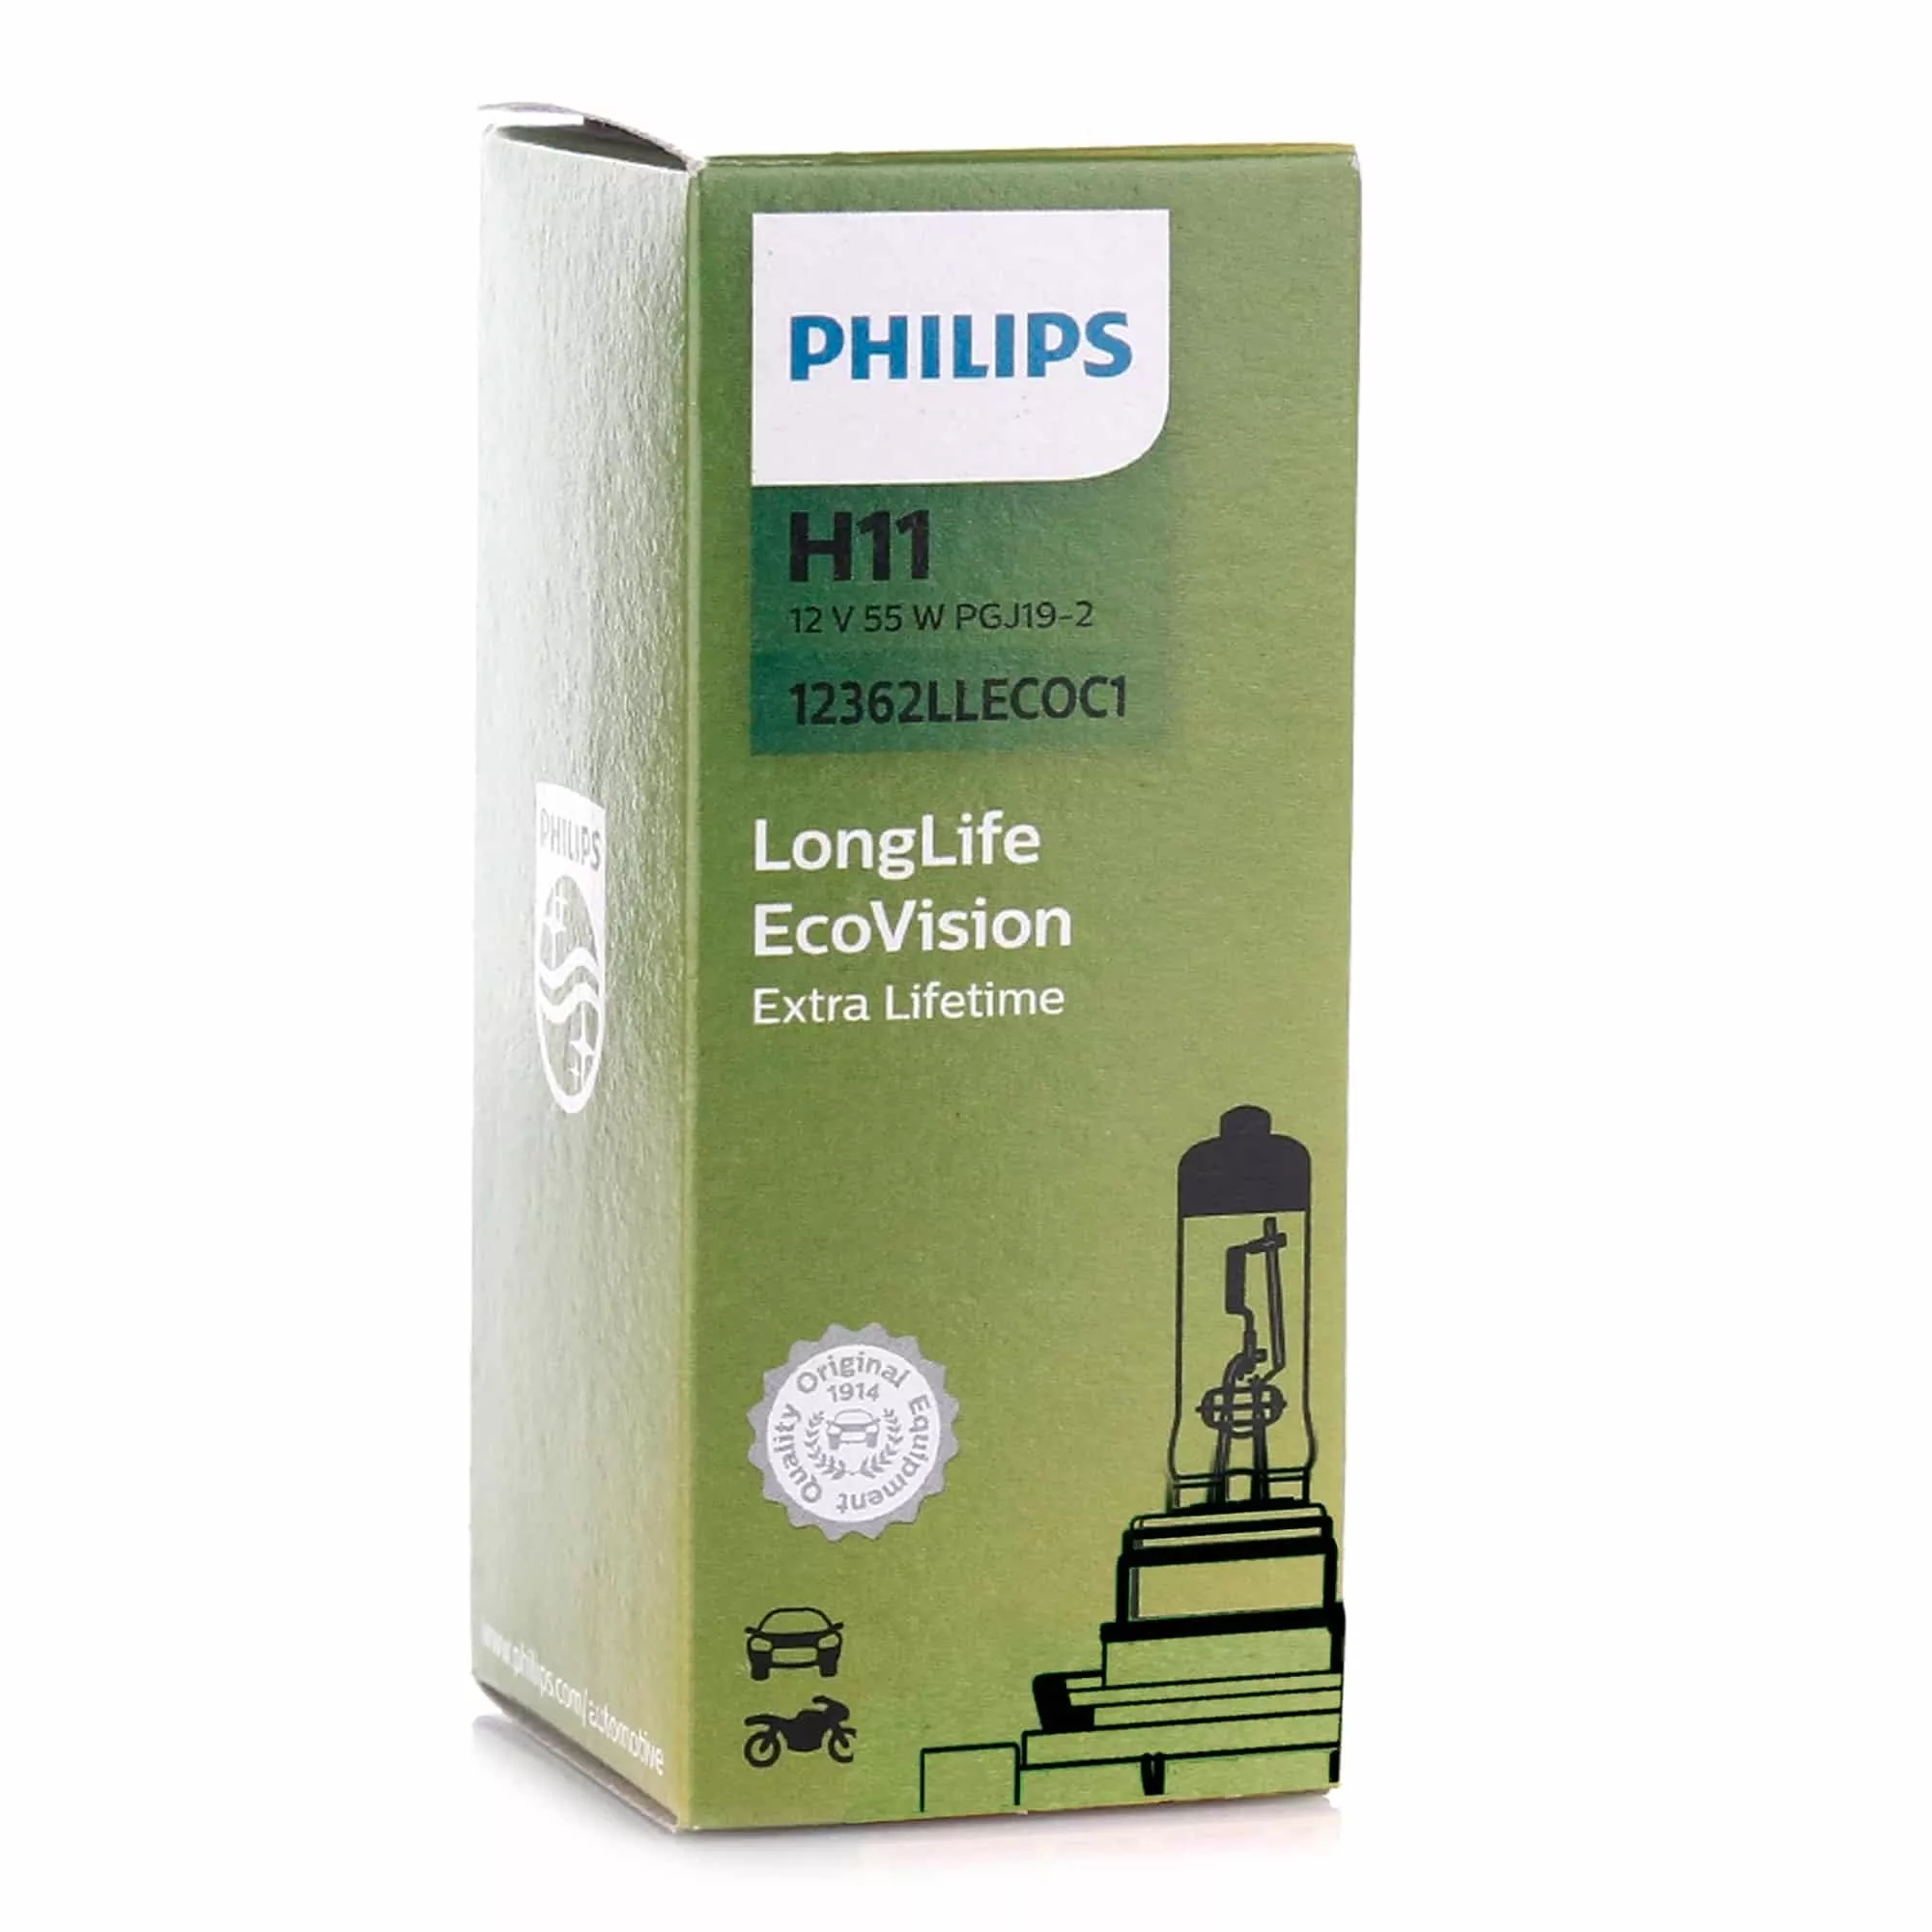 PHILIPS LongLife EcoVision 2 H7 12V 55W